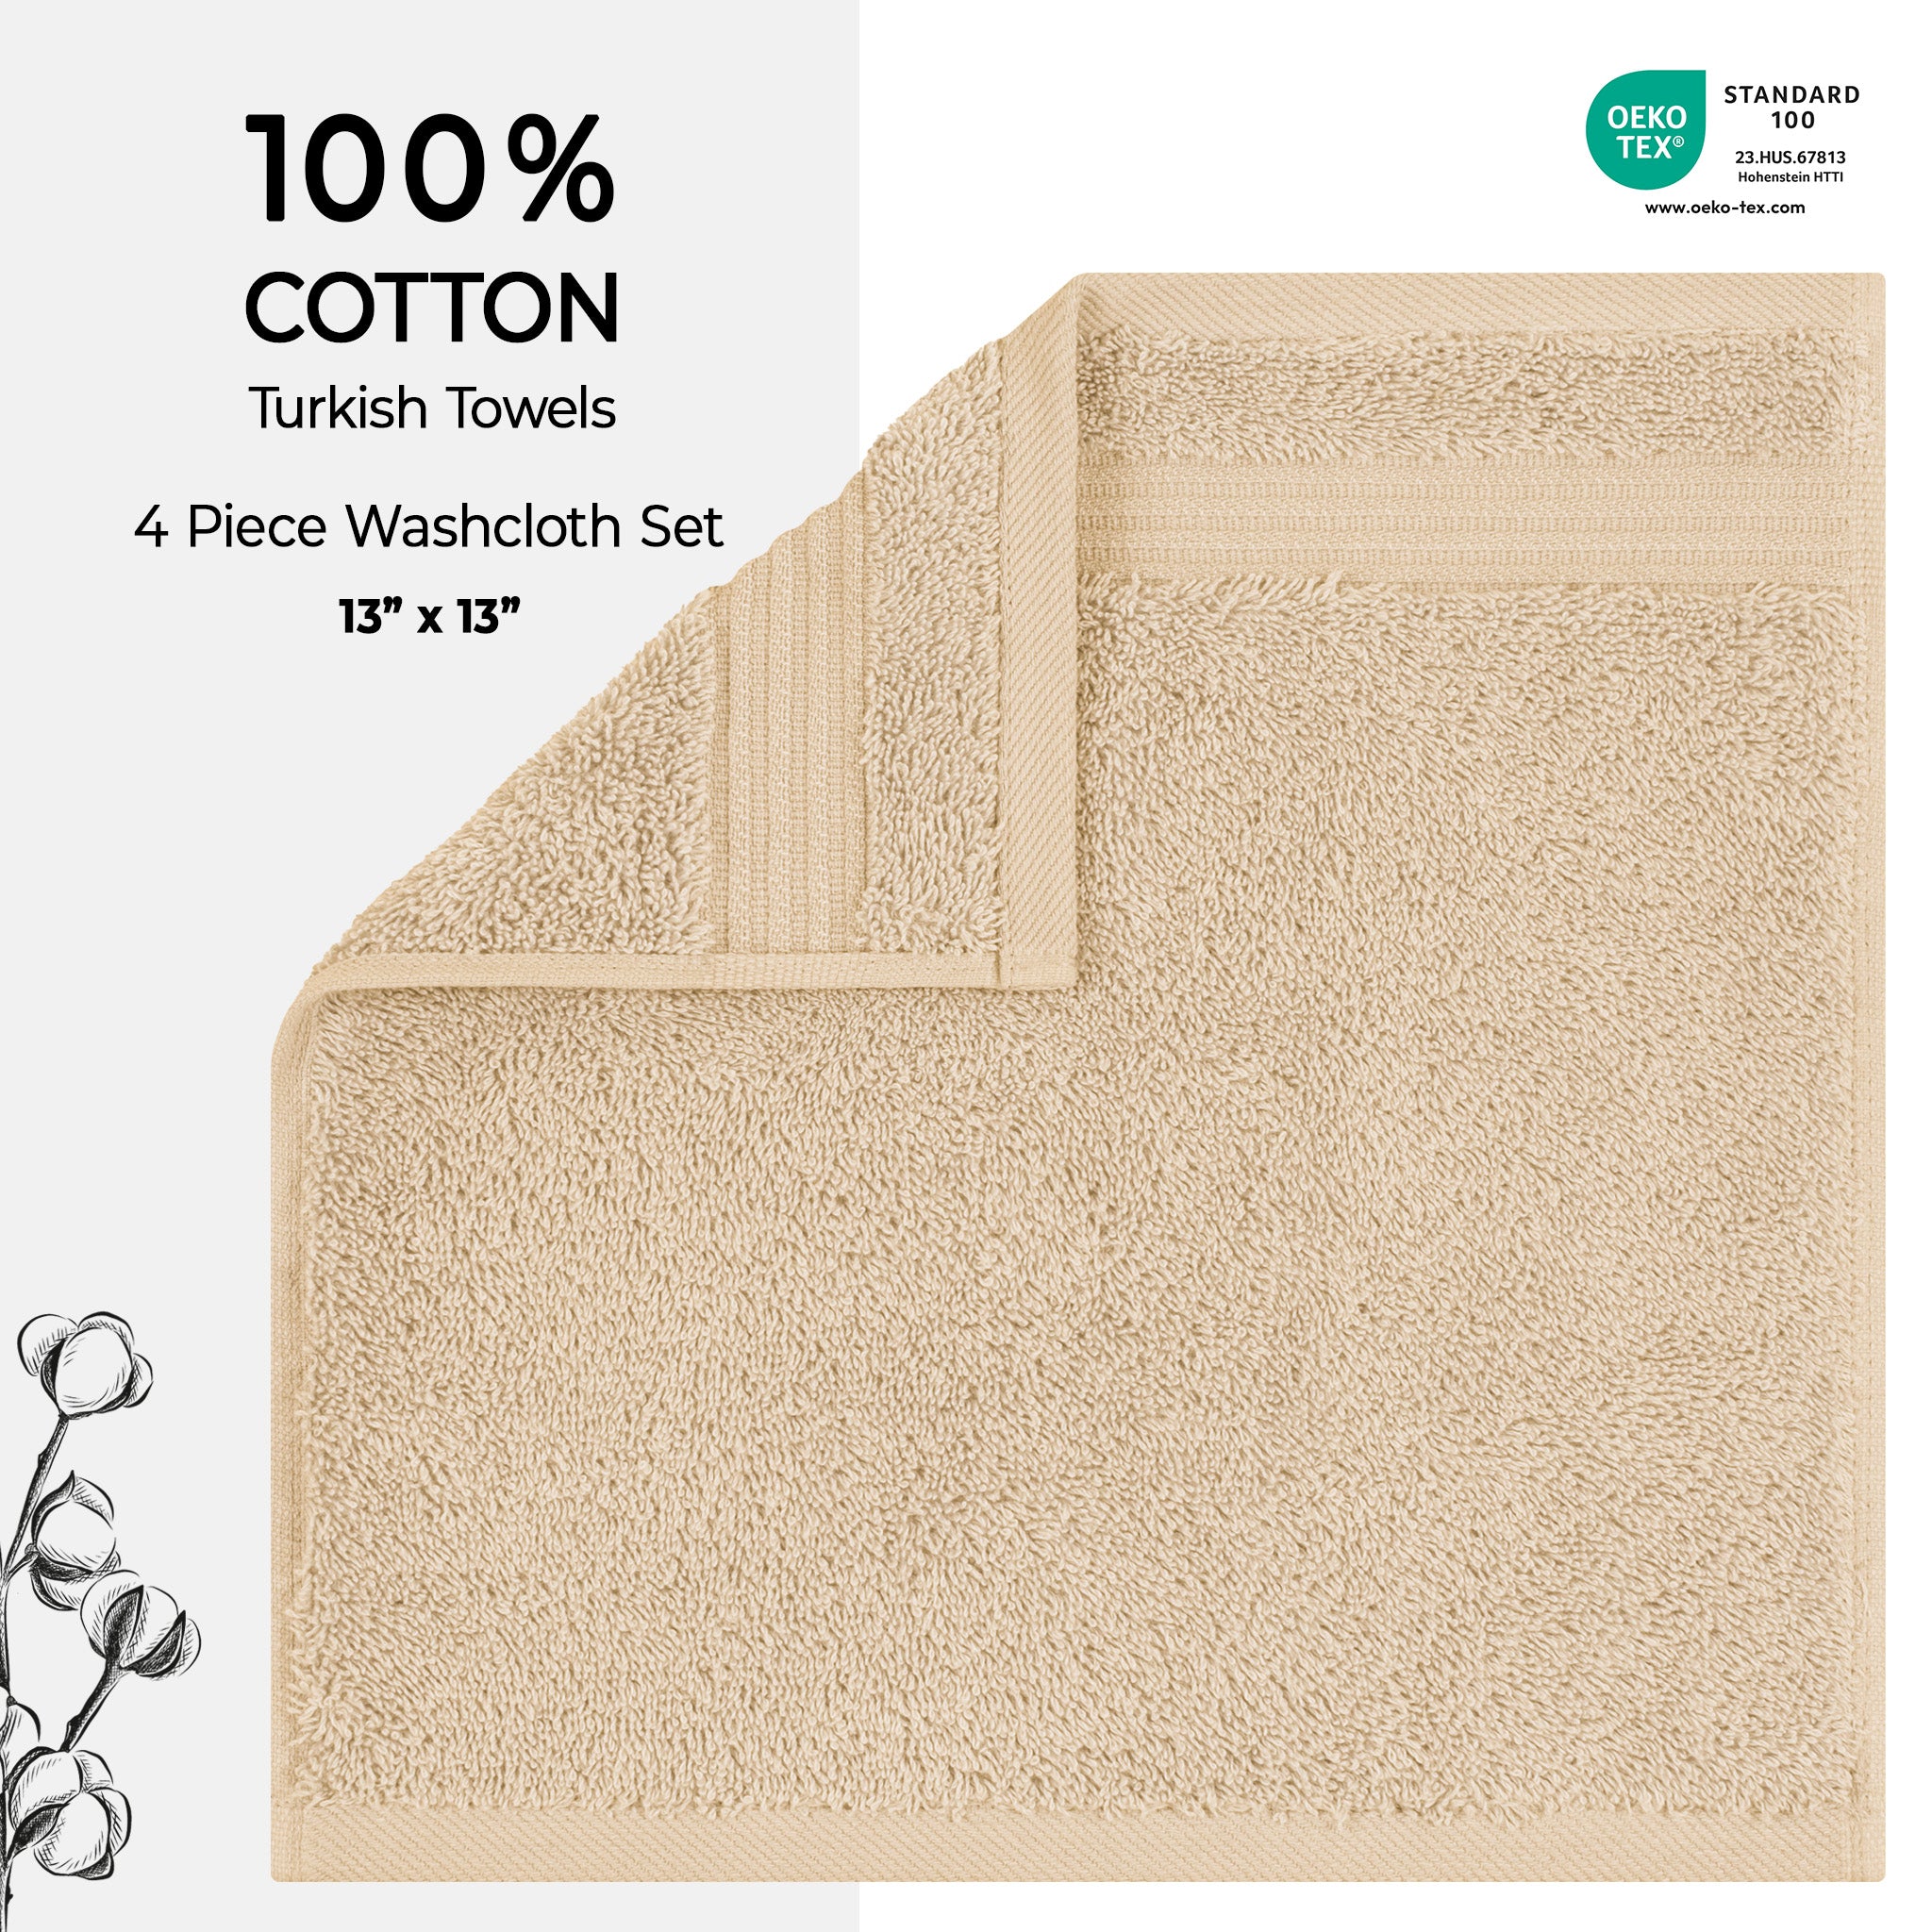 American Soft Linen Bekos 100% Cotton Turkish Towels, 4 Piece Washcloth Towel Set -sand-taupe-02